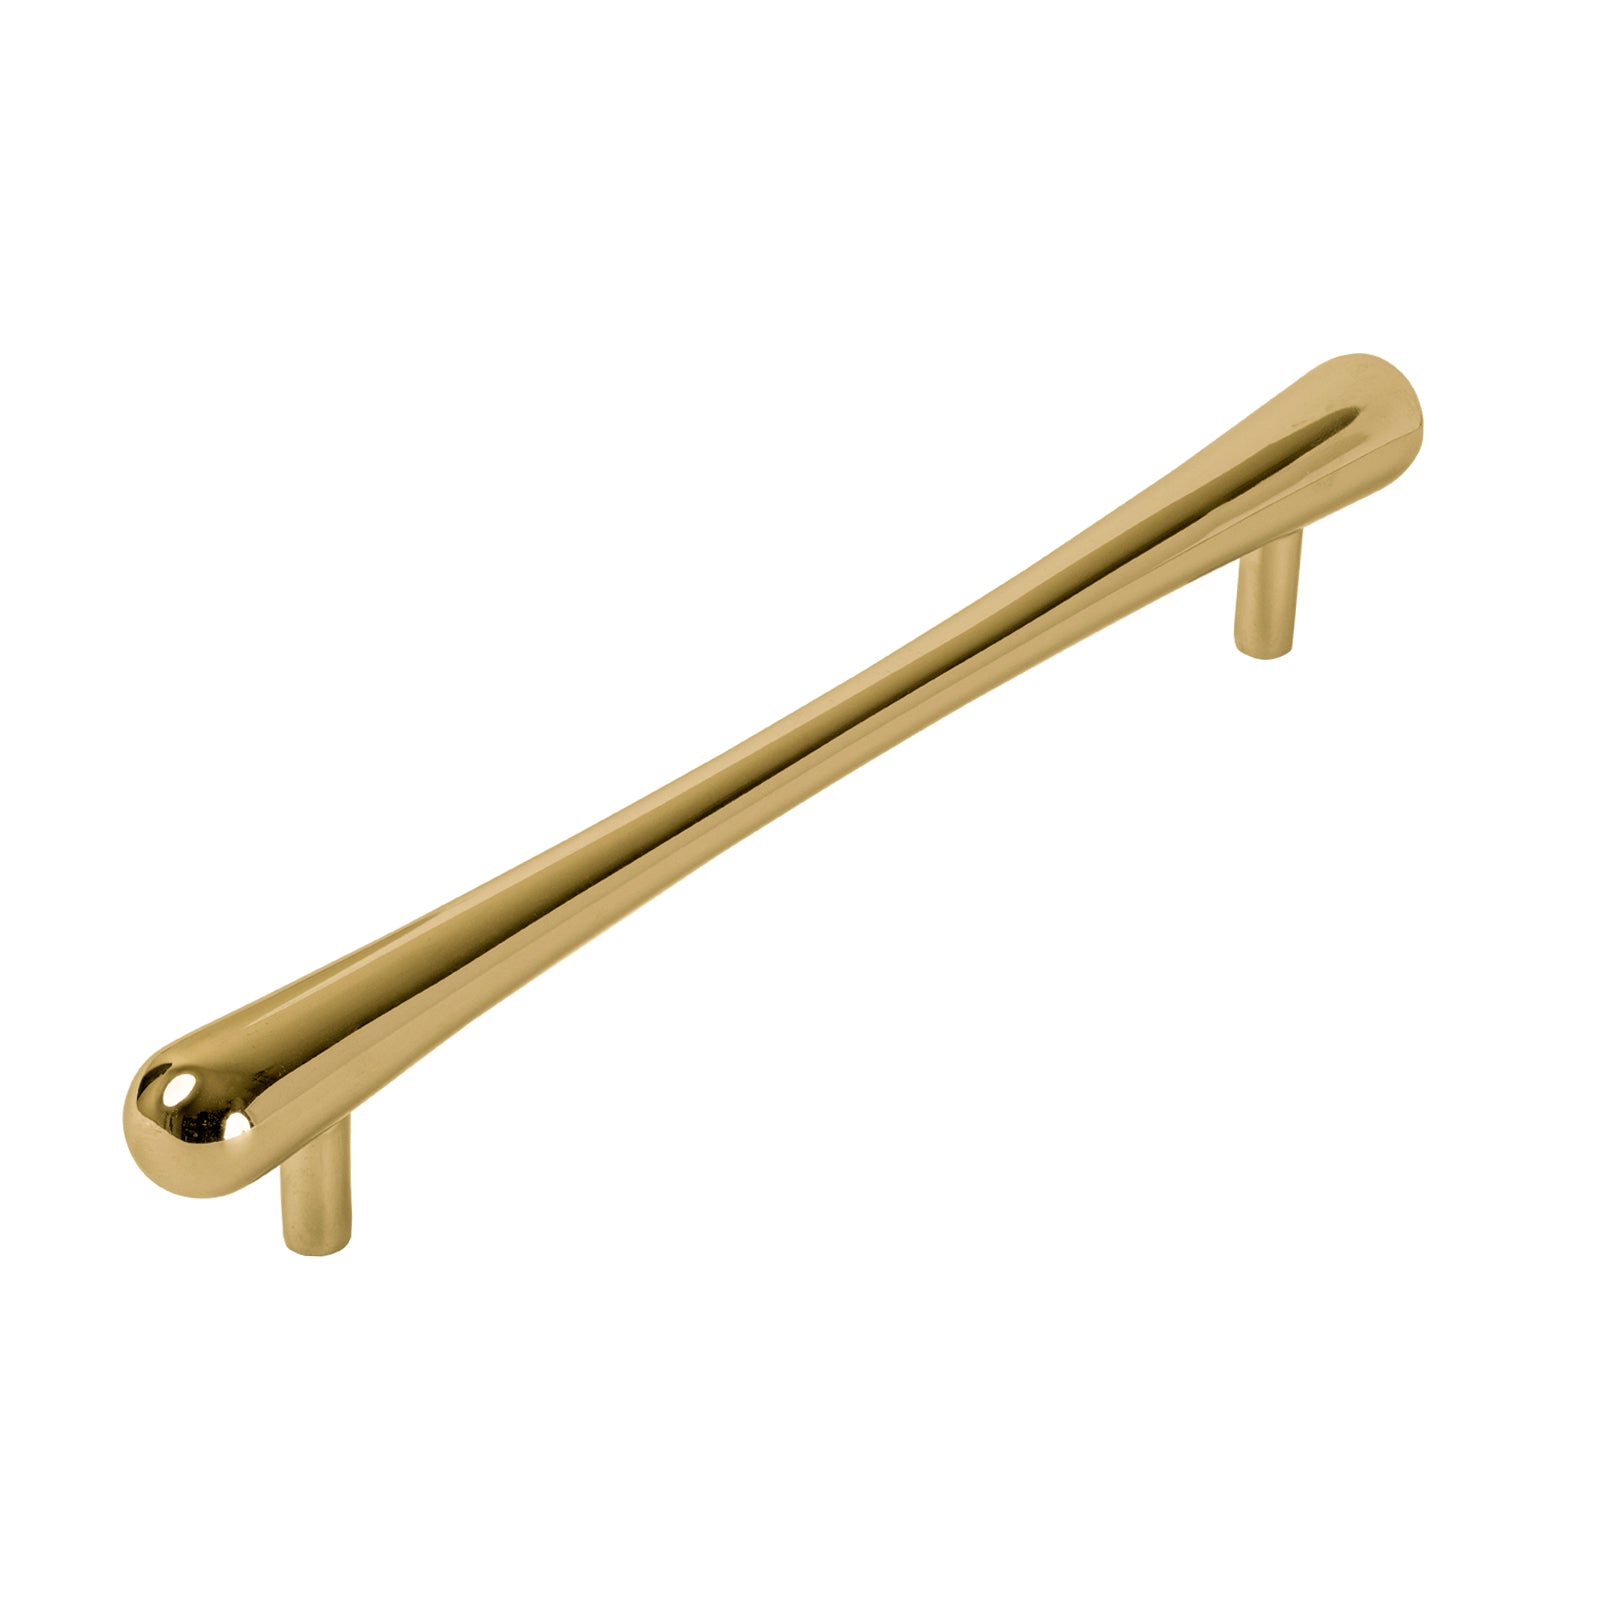 Polished brass bar pull handles, kitchen cabinet handles